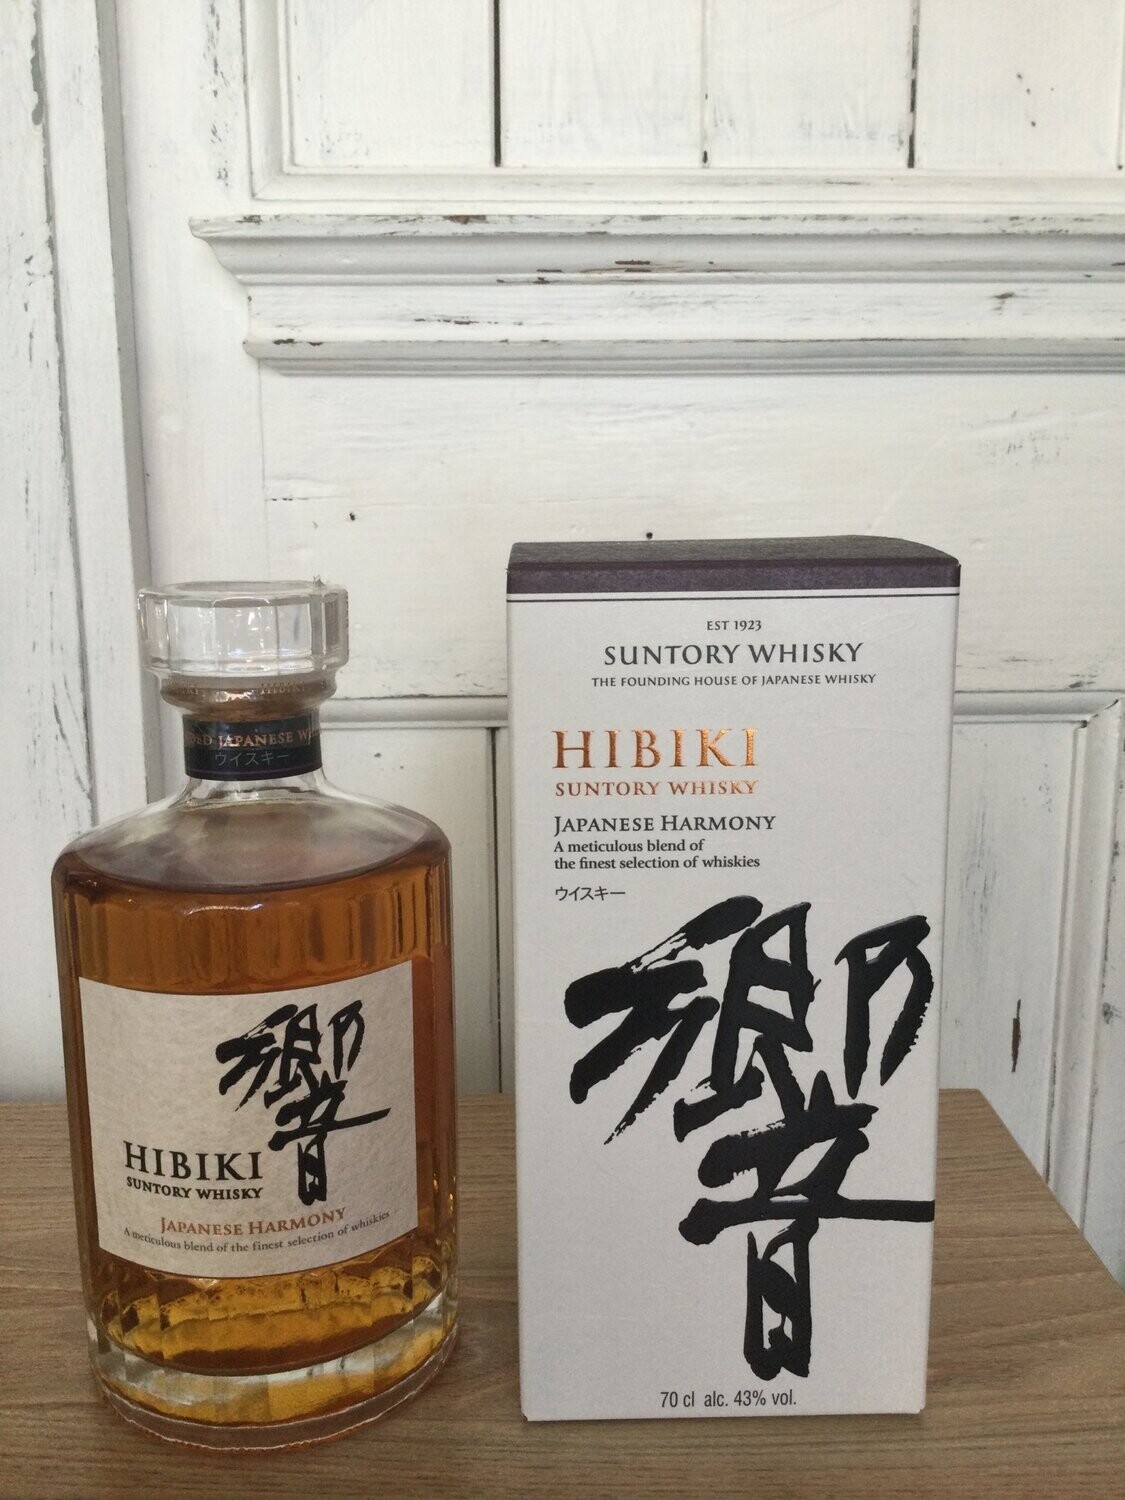 Hibiki Suntory whisky, Japanese Harmony, a meticulous blend of the